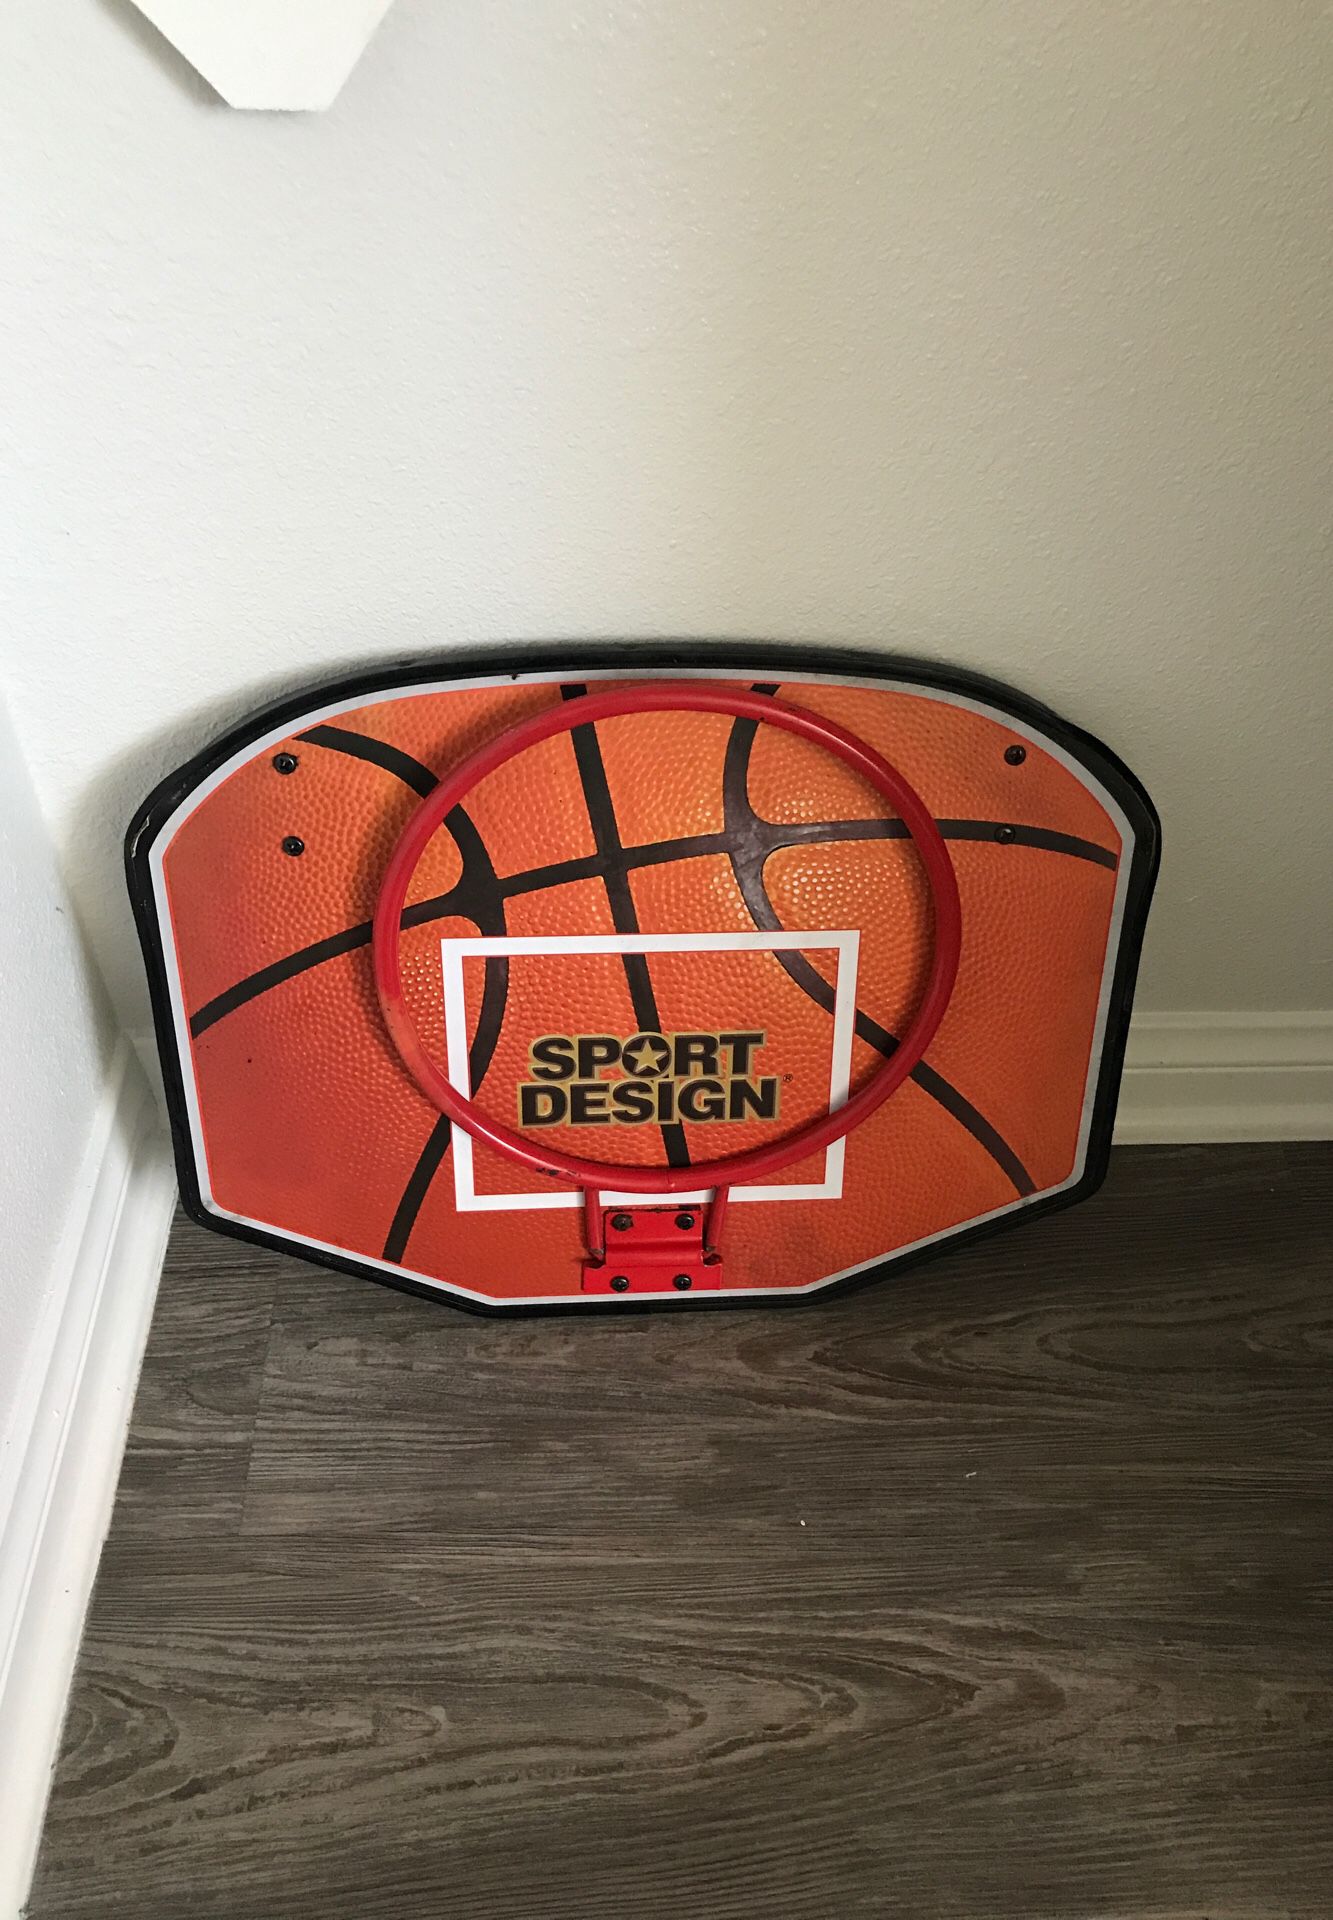 Room basketball hoop (no ball)